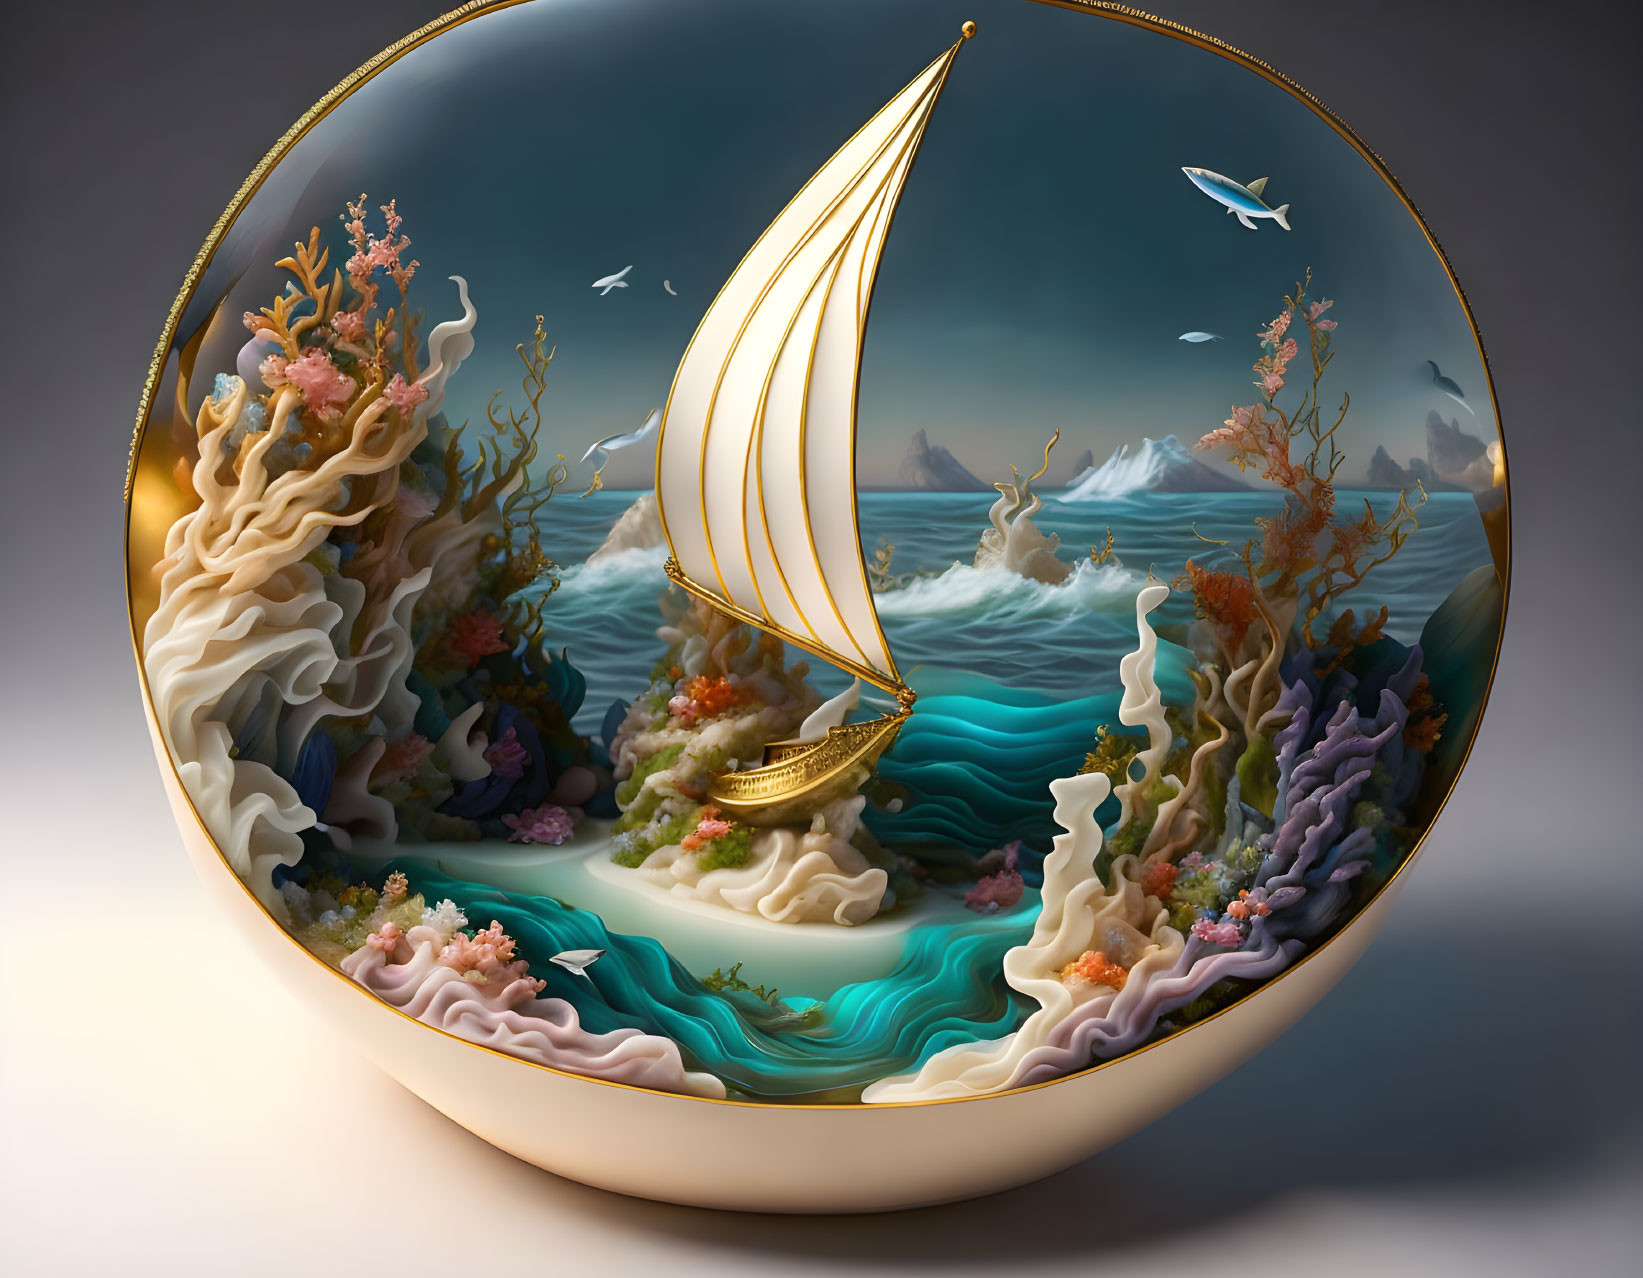 Circular Framed Illustration of Fantastical Sea Scene with Golden Sailboat, Coral Formations,